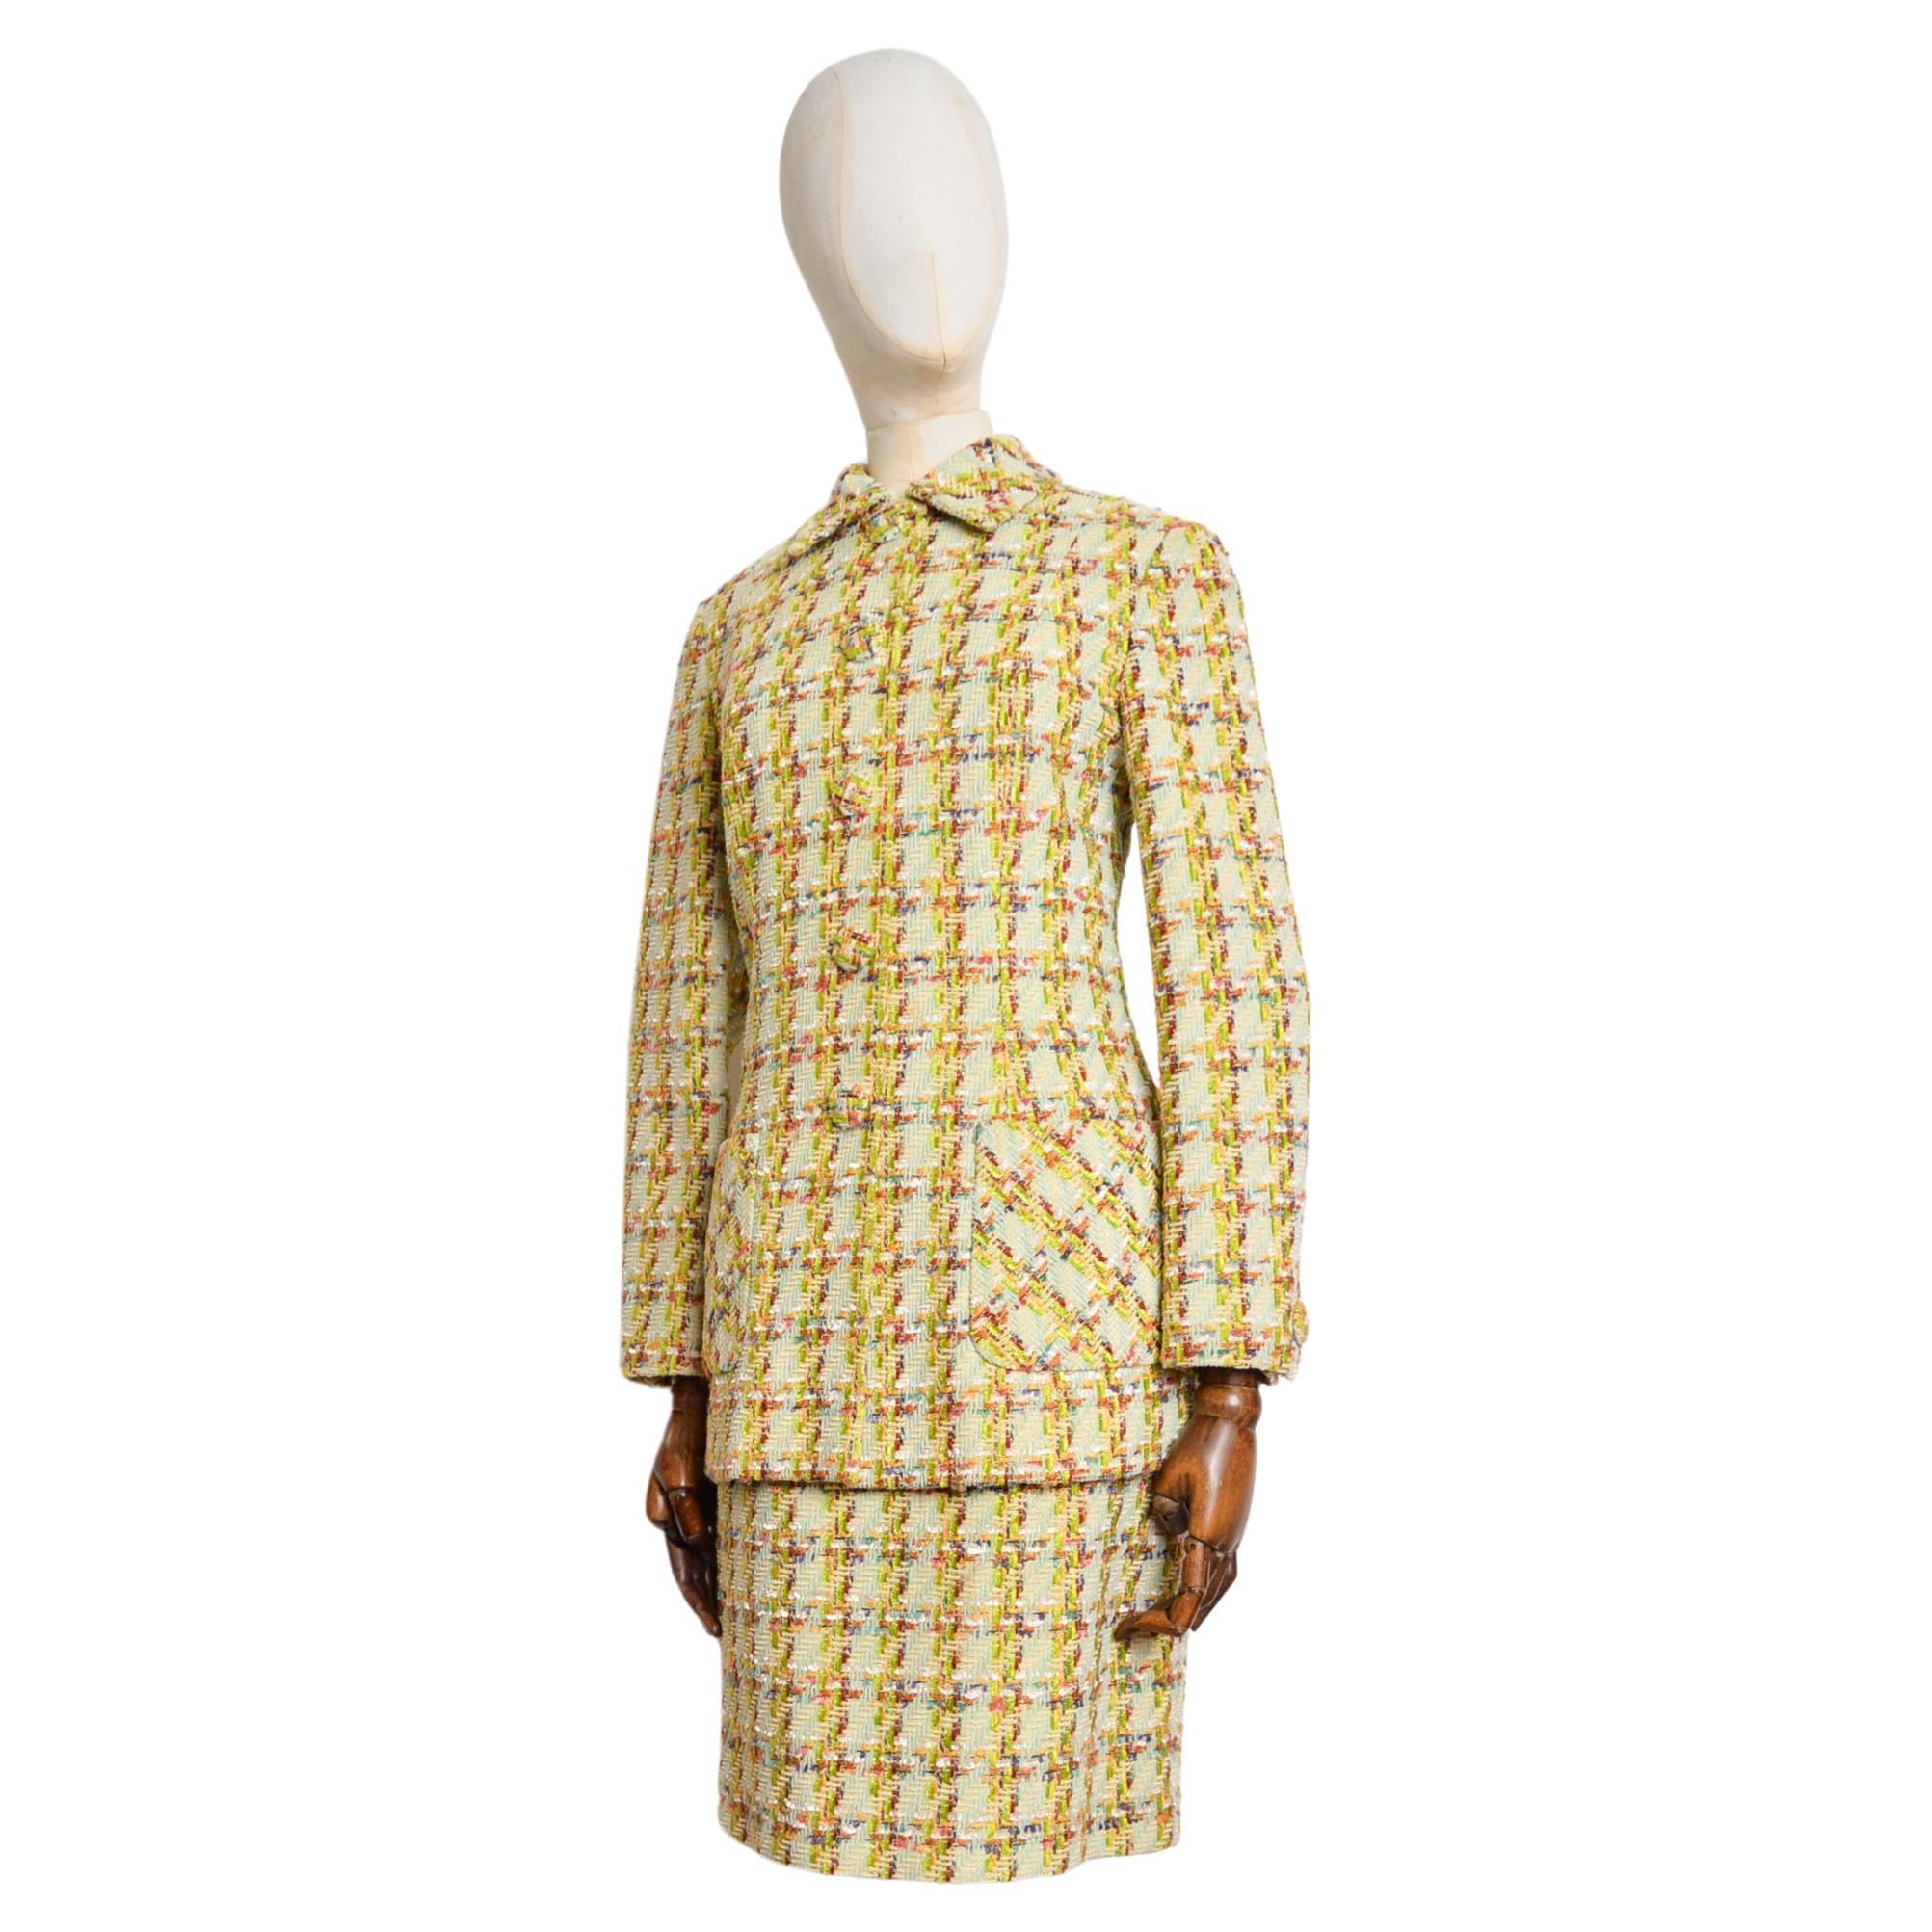 S/S 1993 ROCHAS Jewel Tone Lime Green Tweed Boucle Jacket & Skirt Matching Set